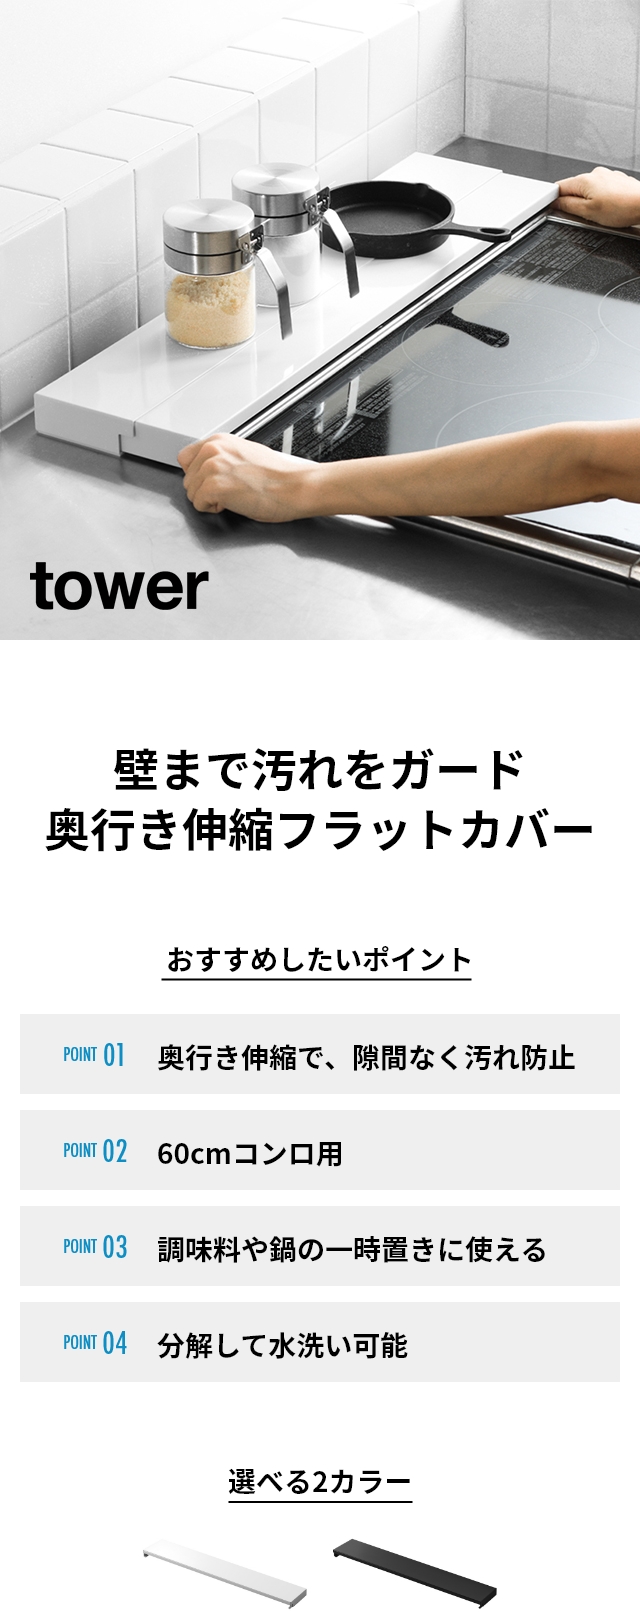 tower (タワー) 奥行伸縮排気口カバー 60cmコンロ用